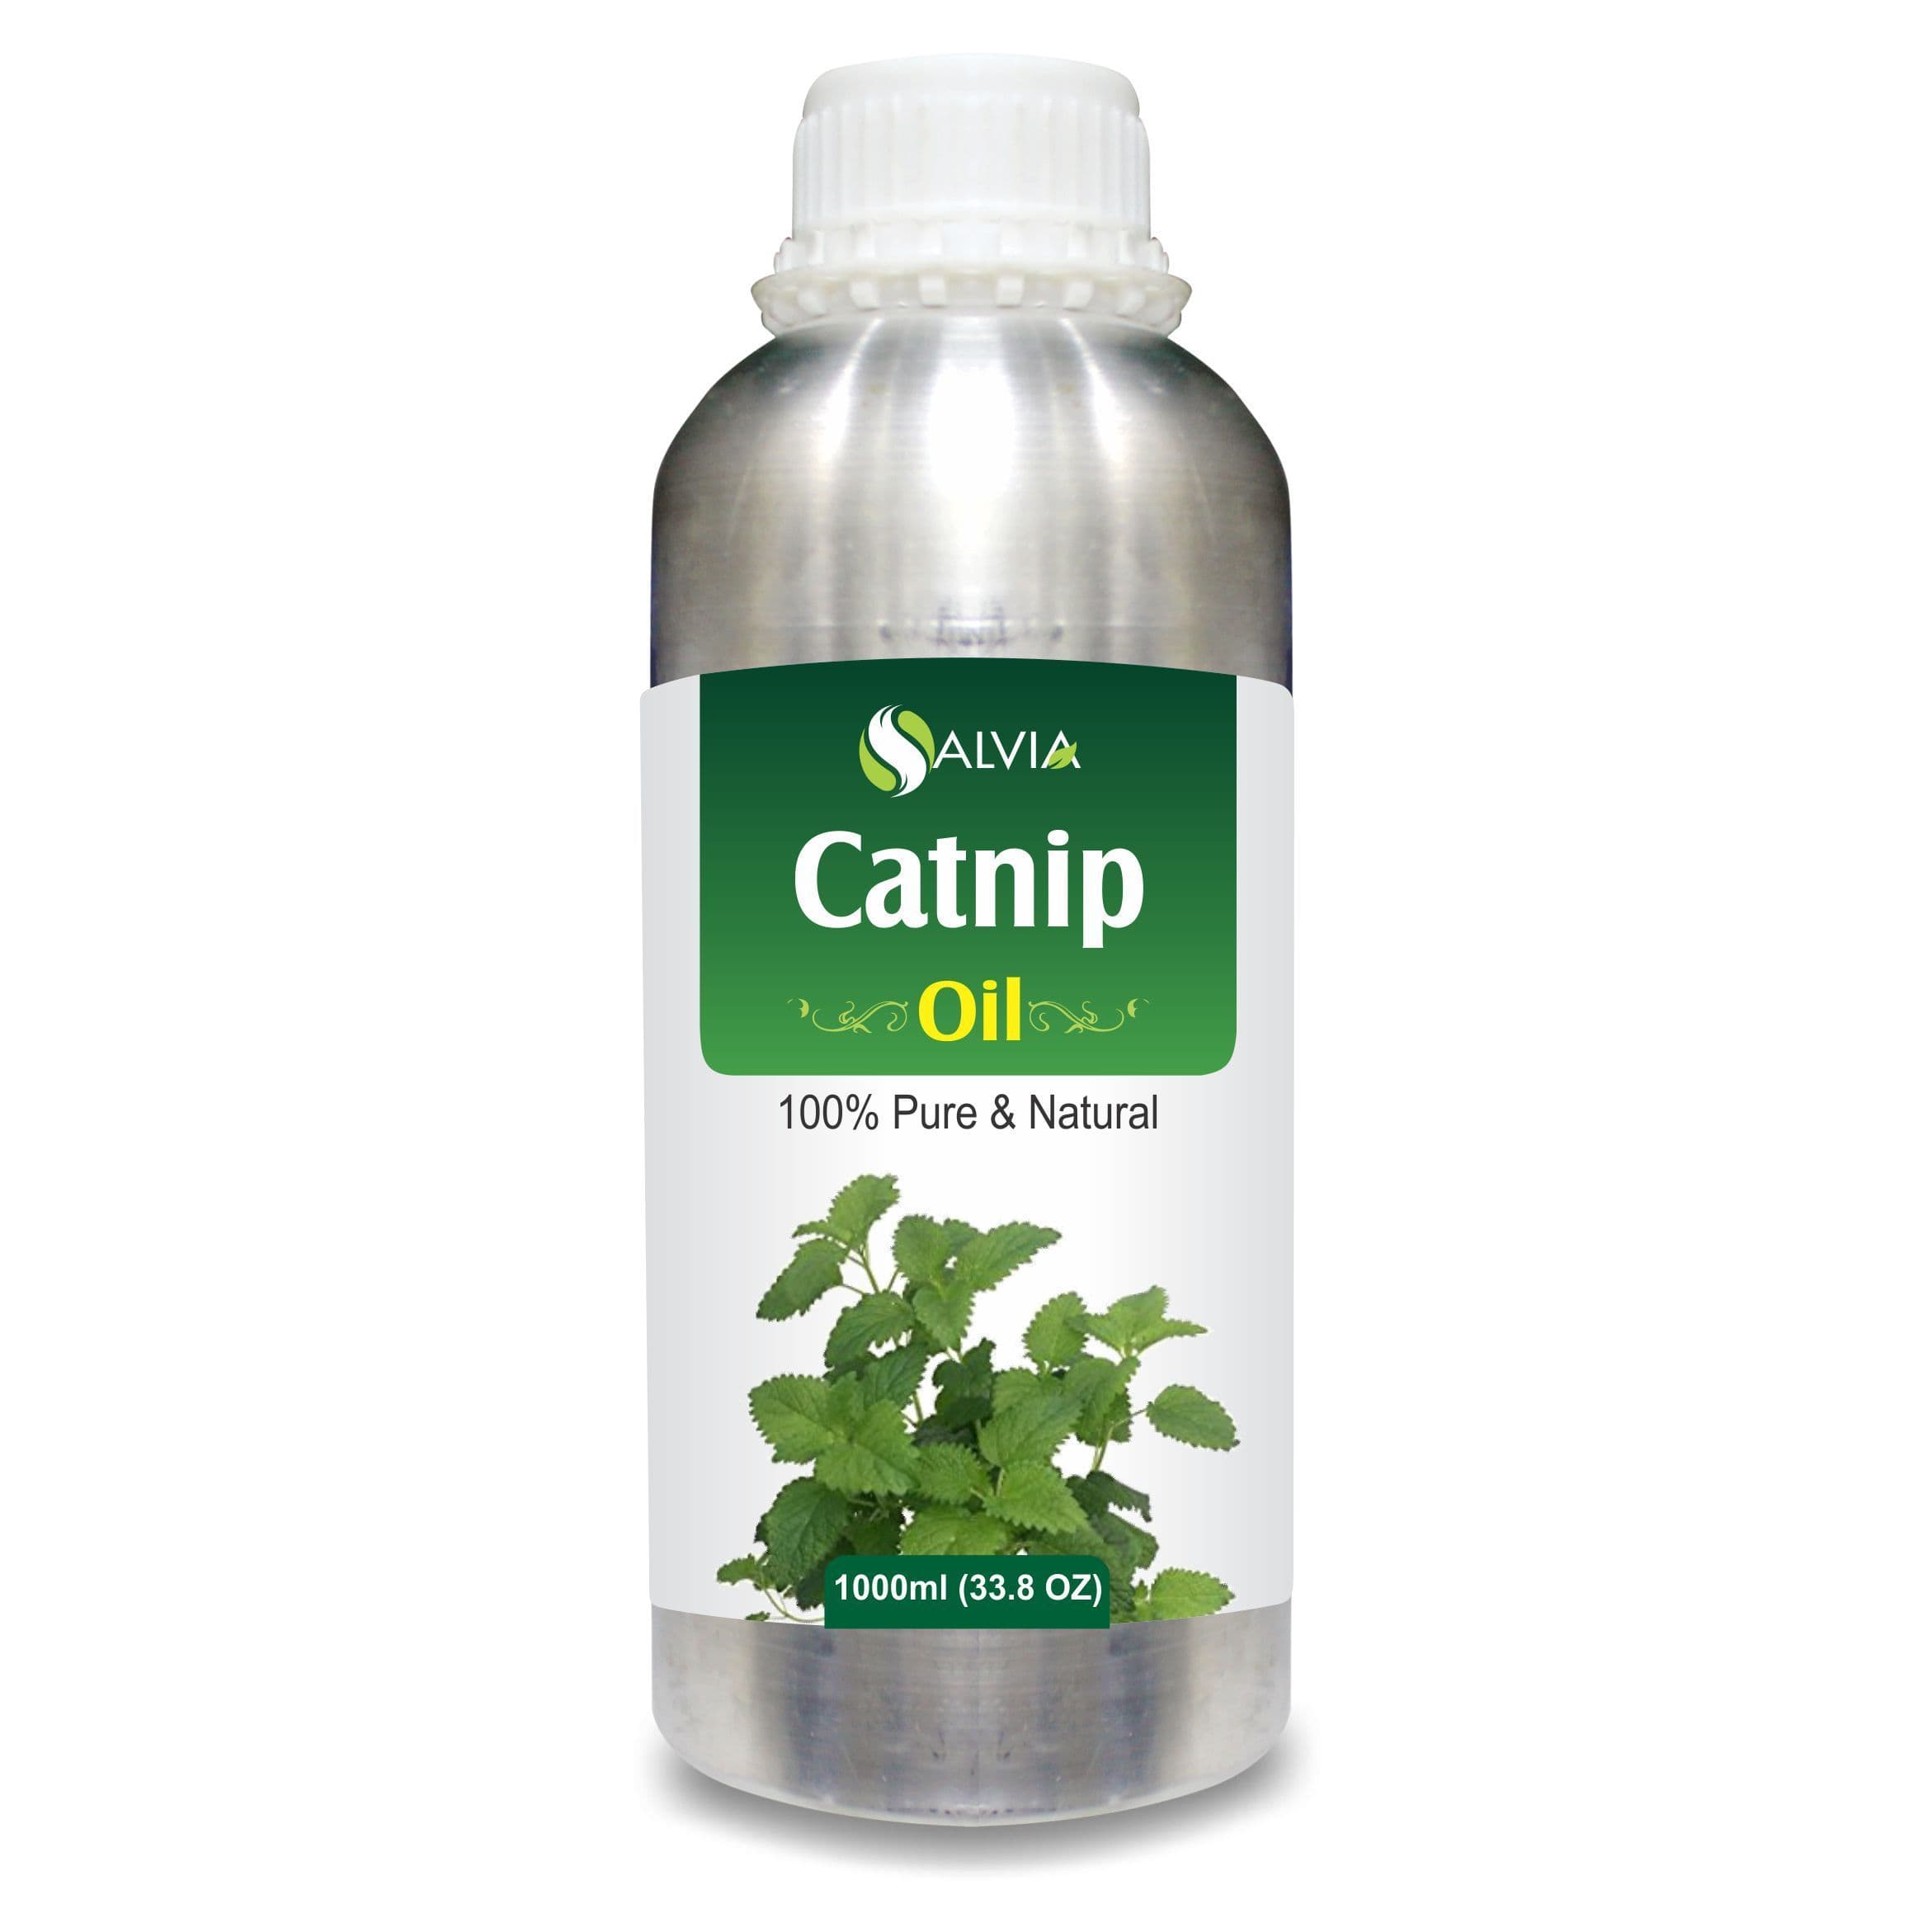 Catnip Oil uses